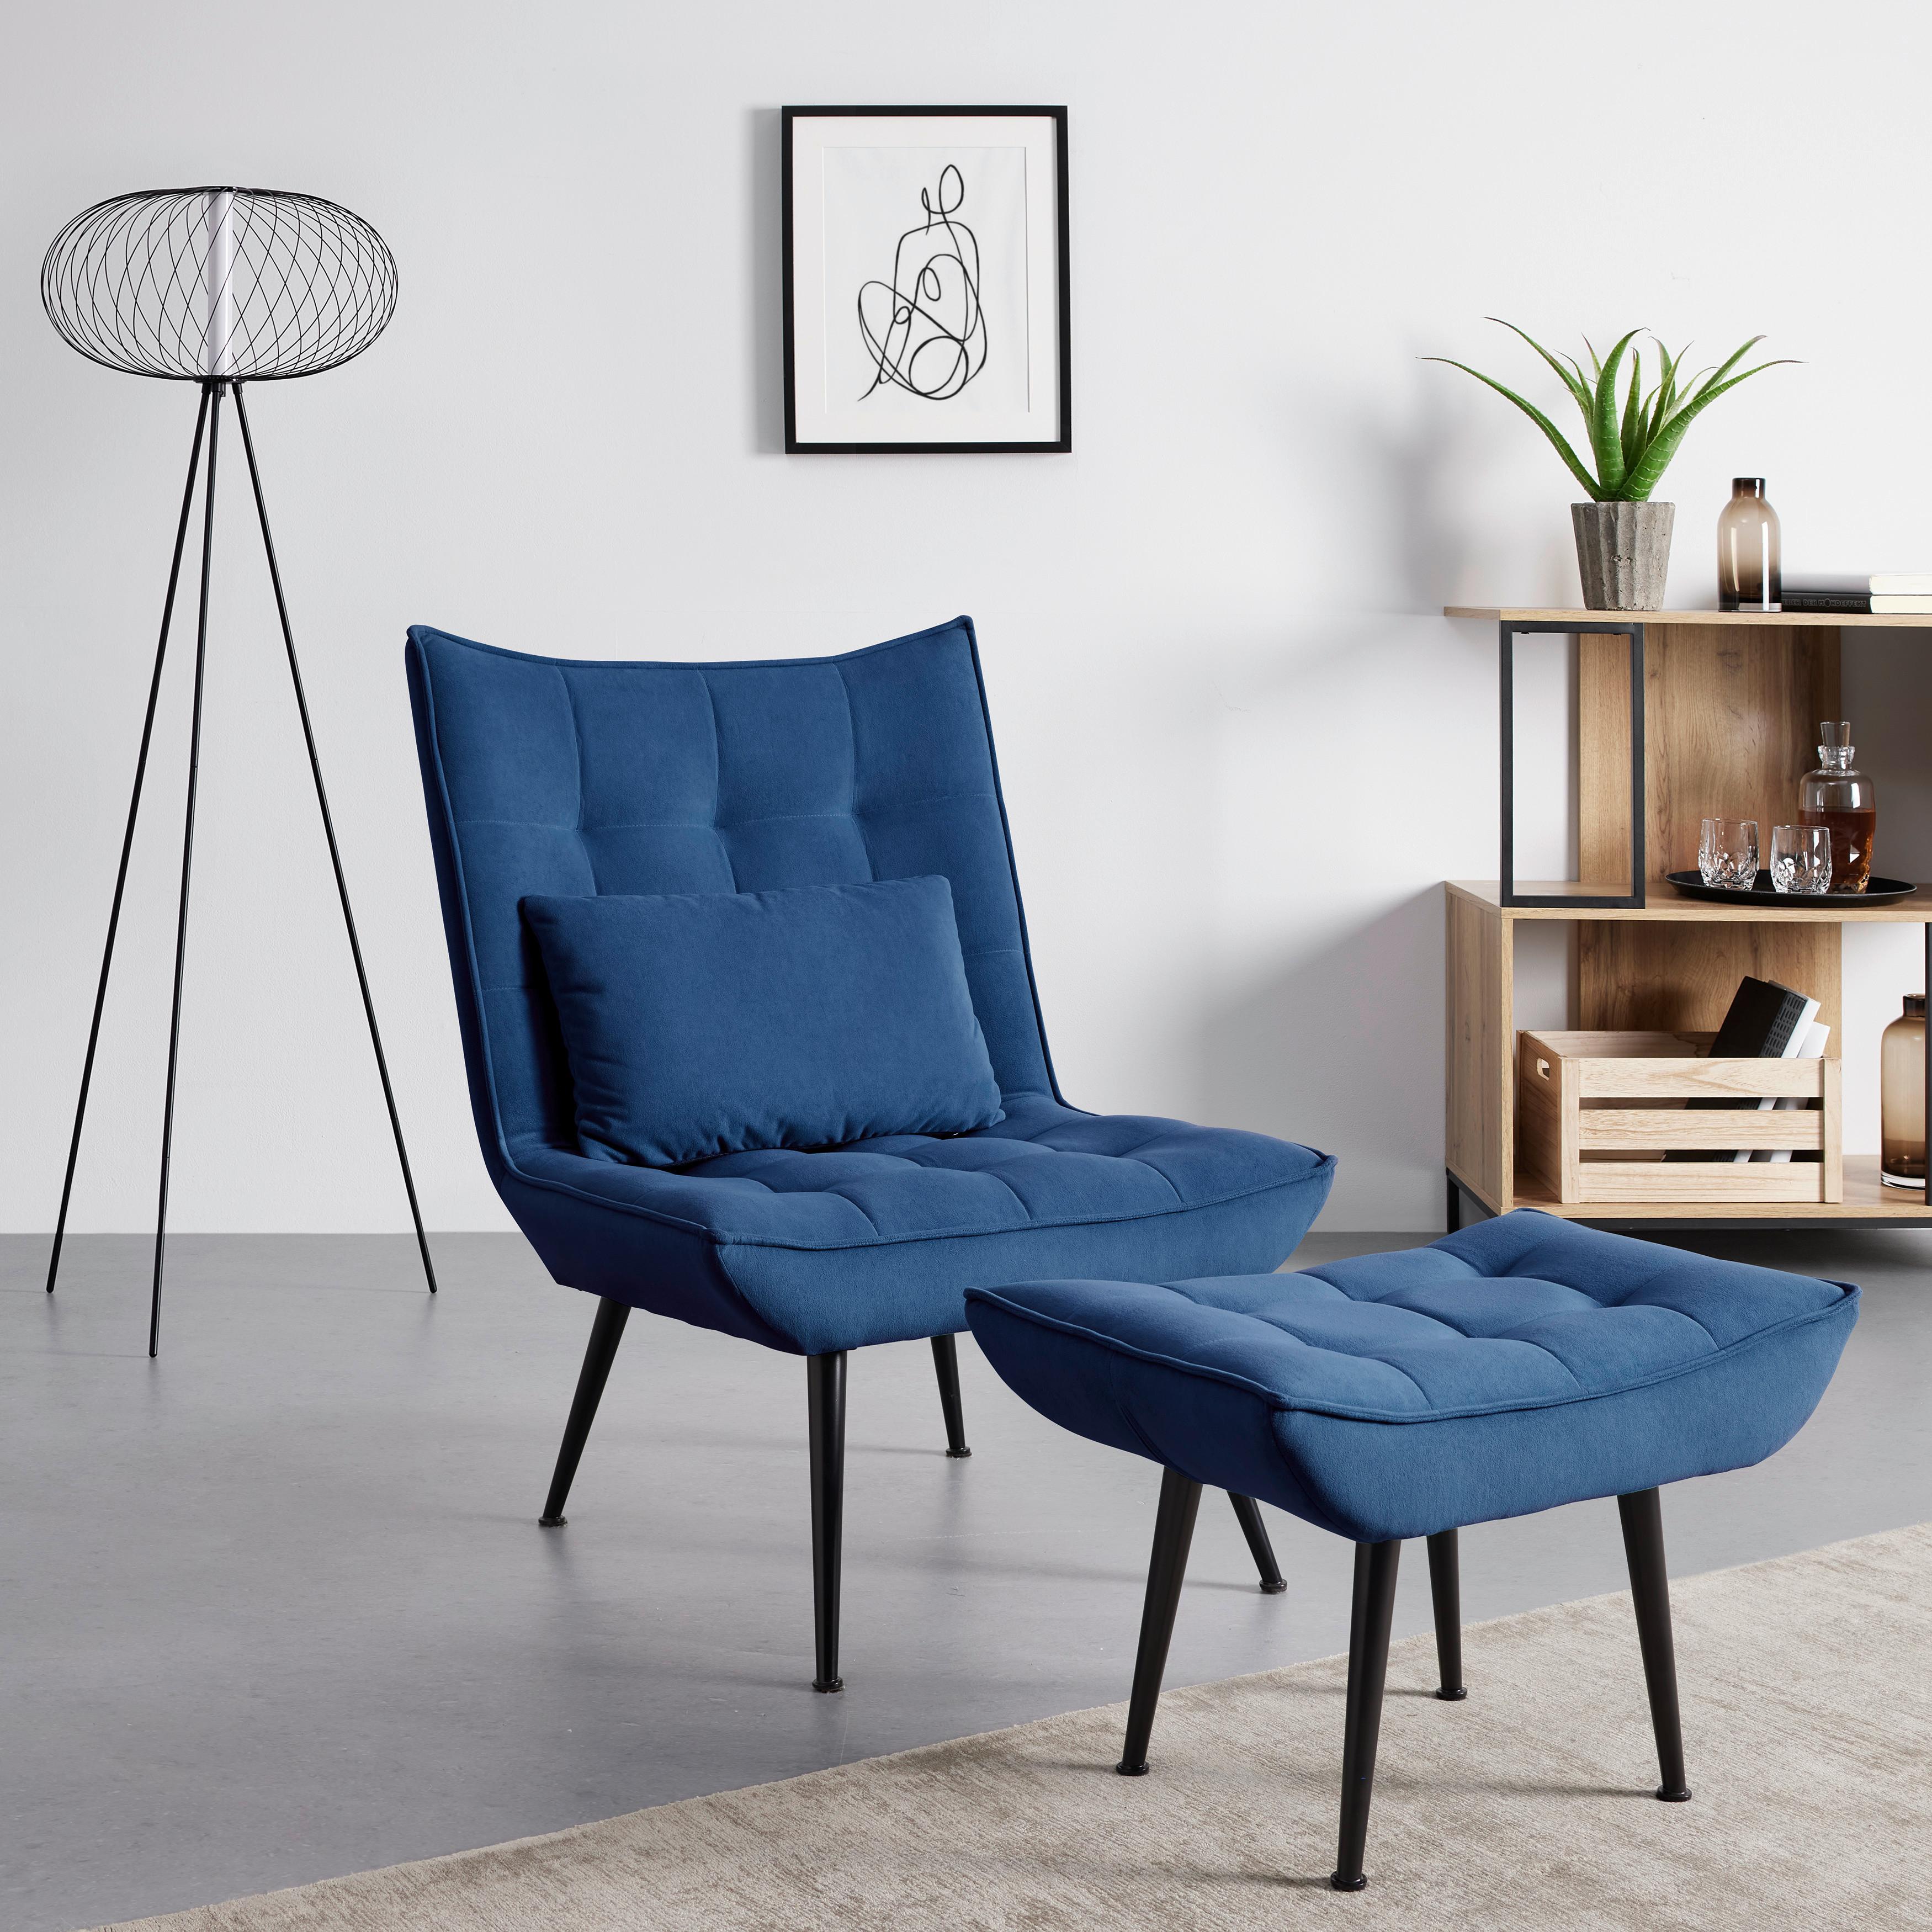 Relaxsessel mit Hocker, blau, "Toma" - Blau/Schwarz, MODERN, Holz/Textil (68/95/66cm) - Bessagi Home